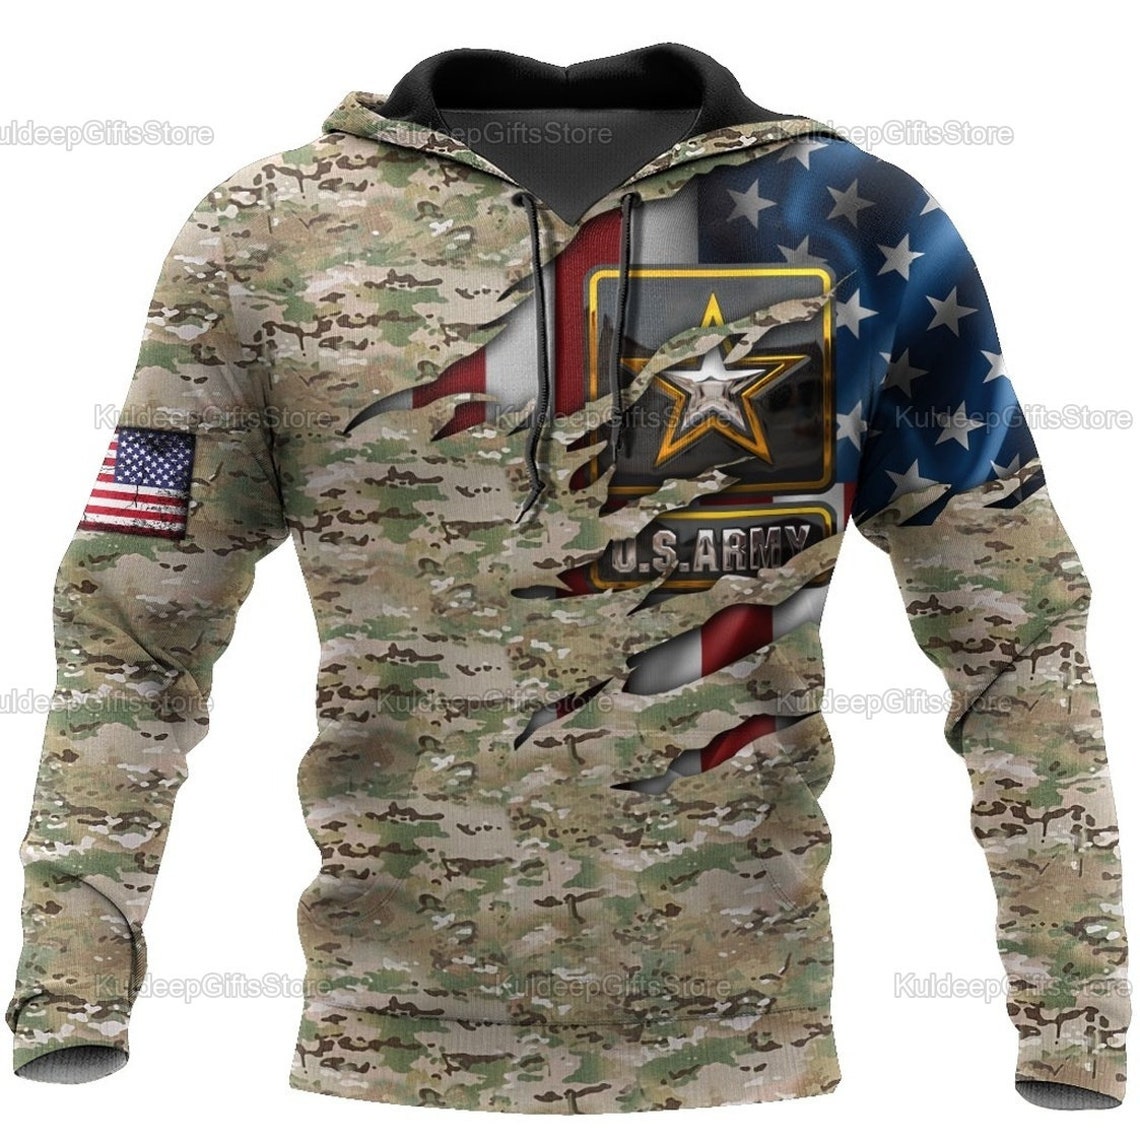 U.S Army Camo Flag Hoodie Army Camo Hoodie Be Brave Limited | Etsy